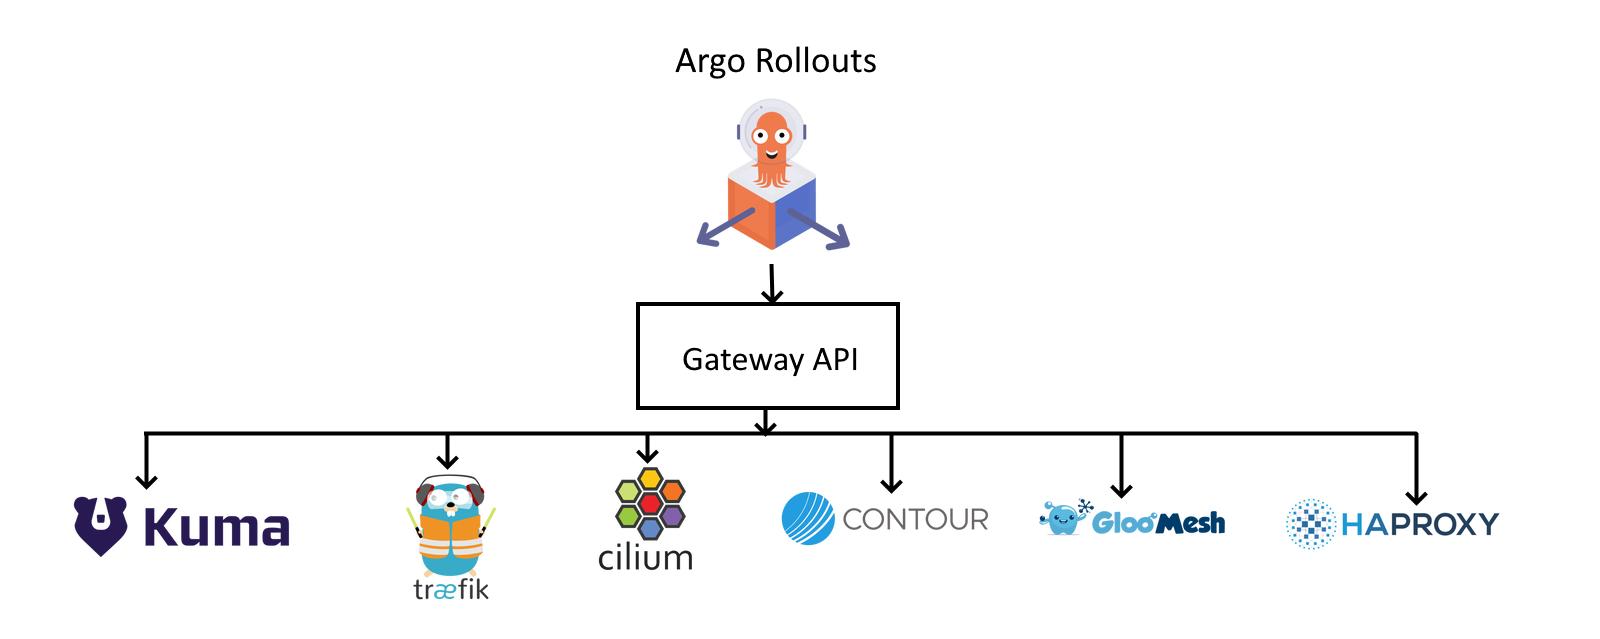 Gateway API with traffic providers